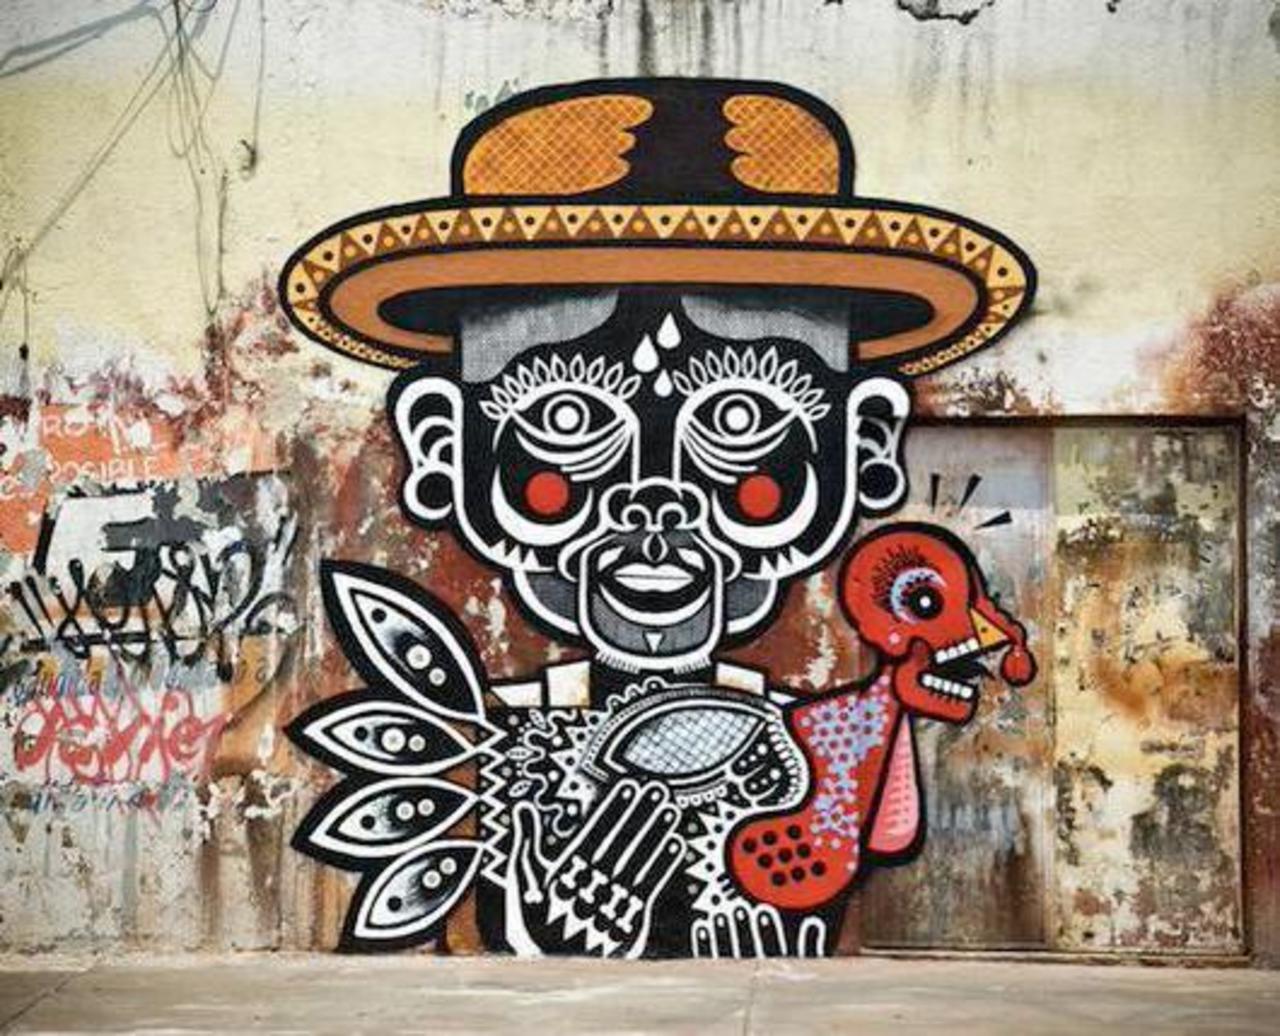 RT @richardbanfa: #Streetart by #neuzz in #mexico #switch #bedifferent #graffiti #arte #art http://t.co/5JQgUcjTAL